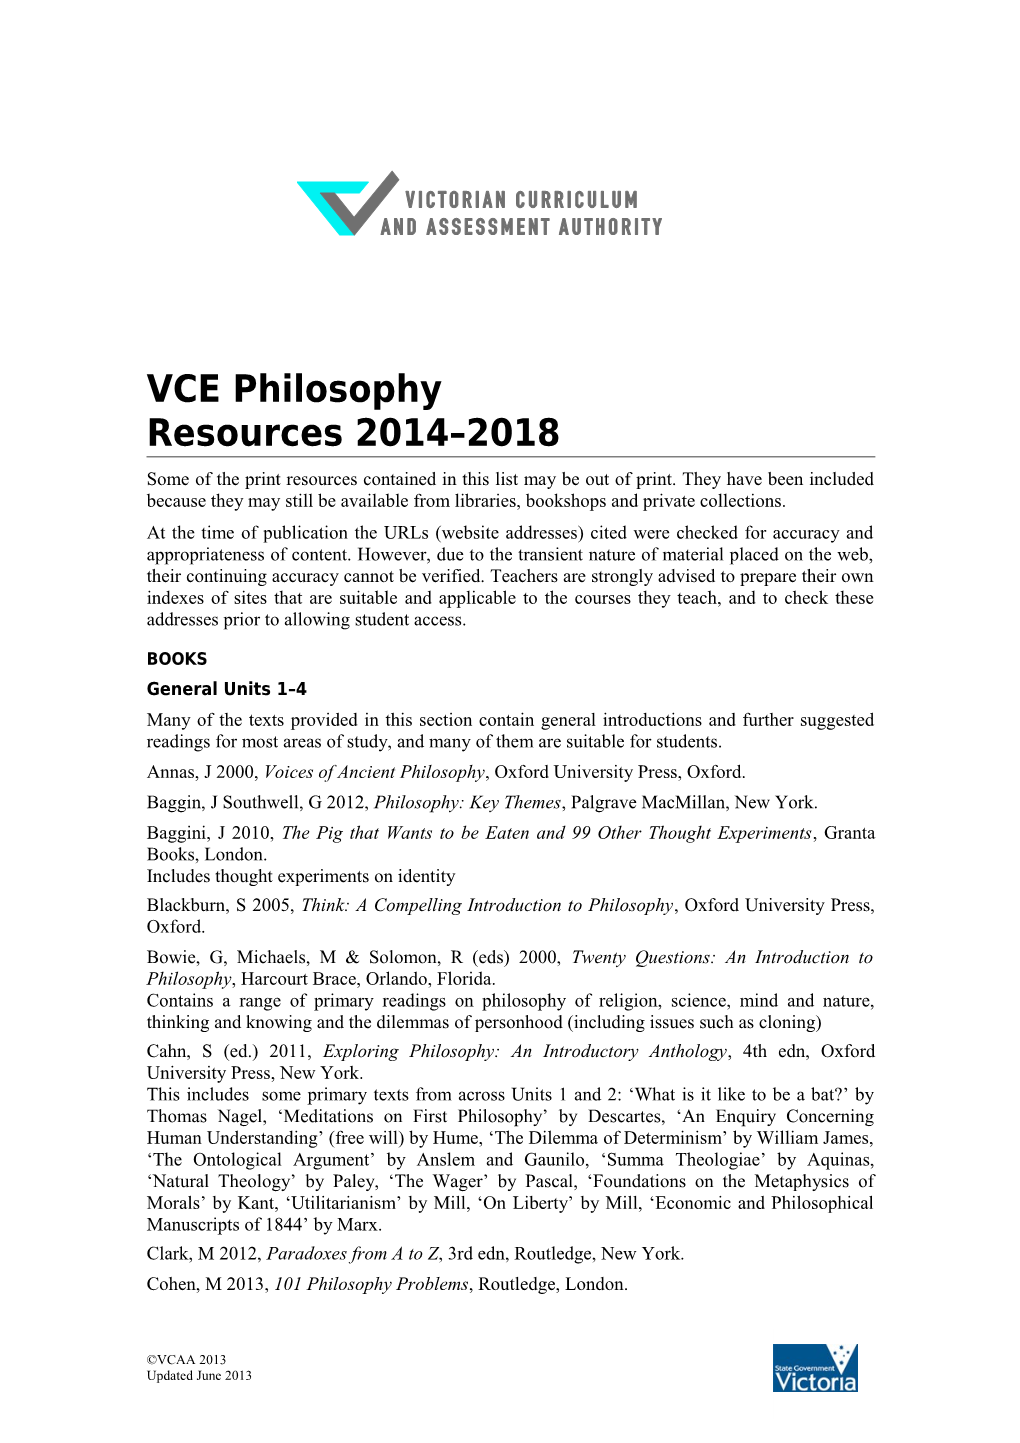 VCE Philosophy Resources 2014-2018